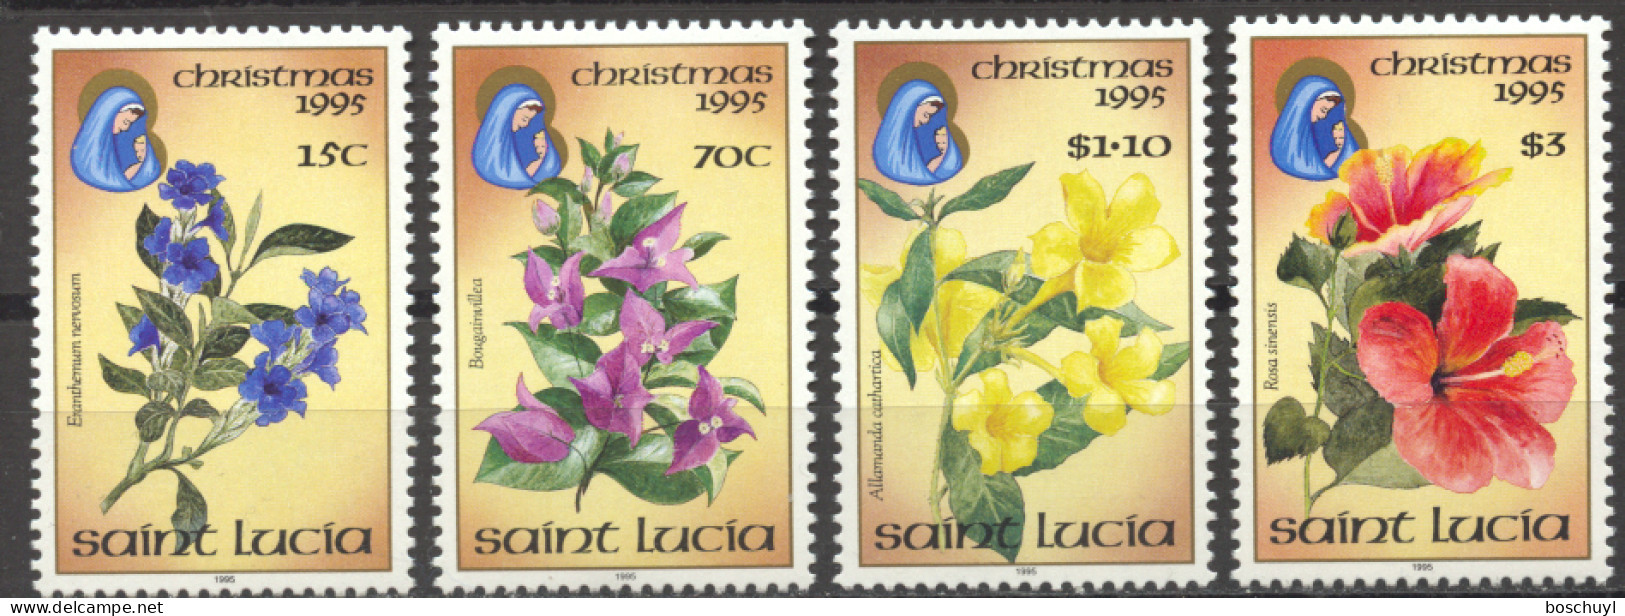 St Lucia, 1995, Christmas, Flowers, Flora, Nature, MNH, Michel 1037-1040 - St.Lucia (1979-...)